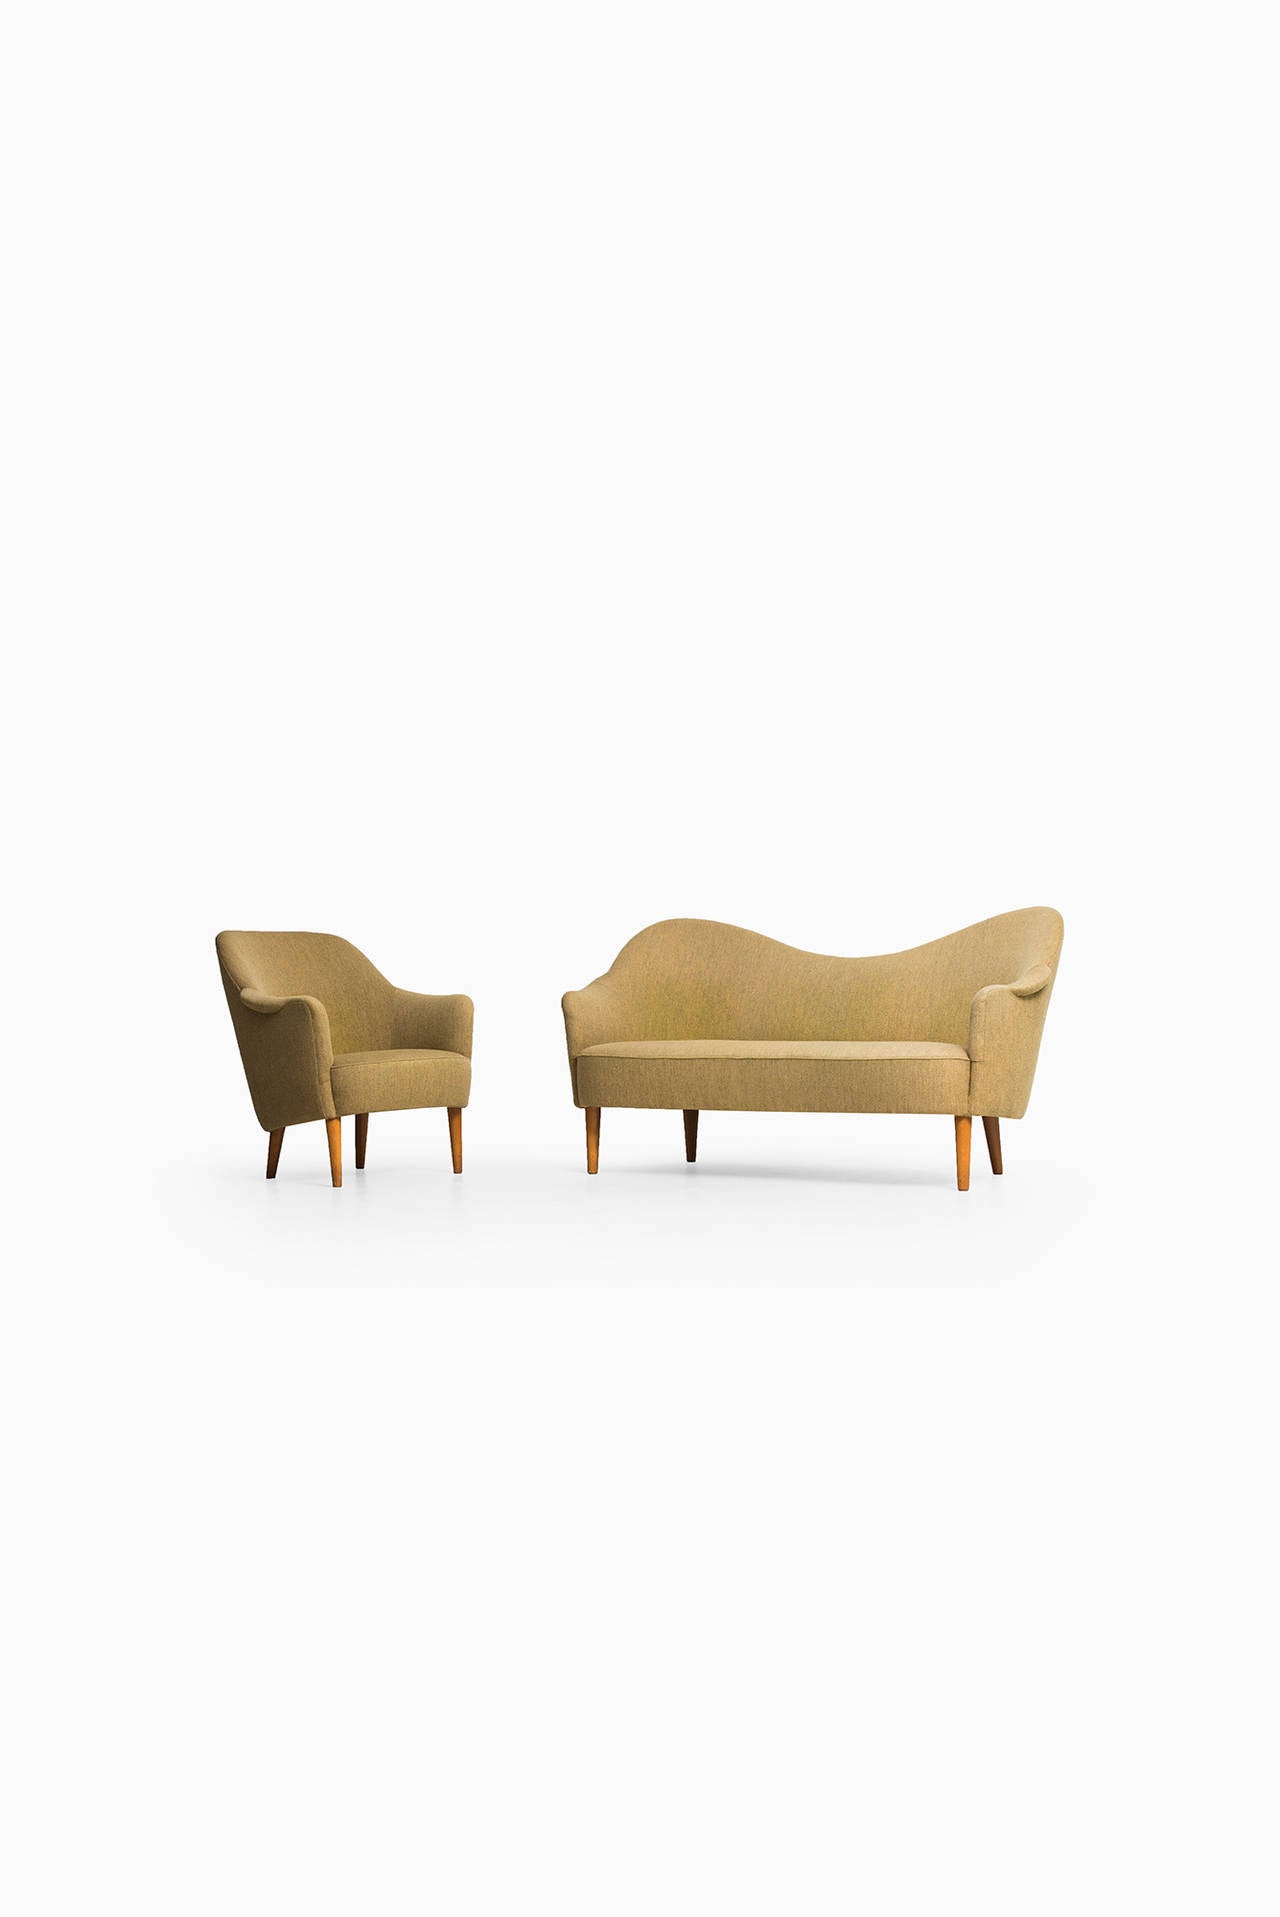 Sofa model Samspel designed by Carl Malmsten. Produced by O.H Sjögren in Tranås, Sweden. Matching easy chair as well.